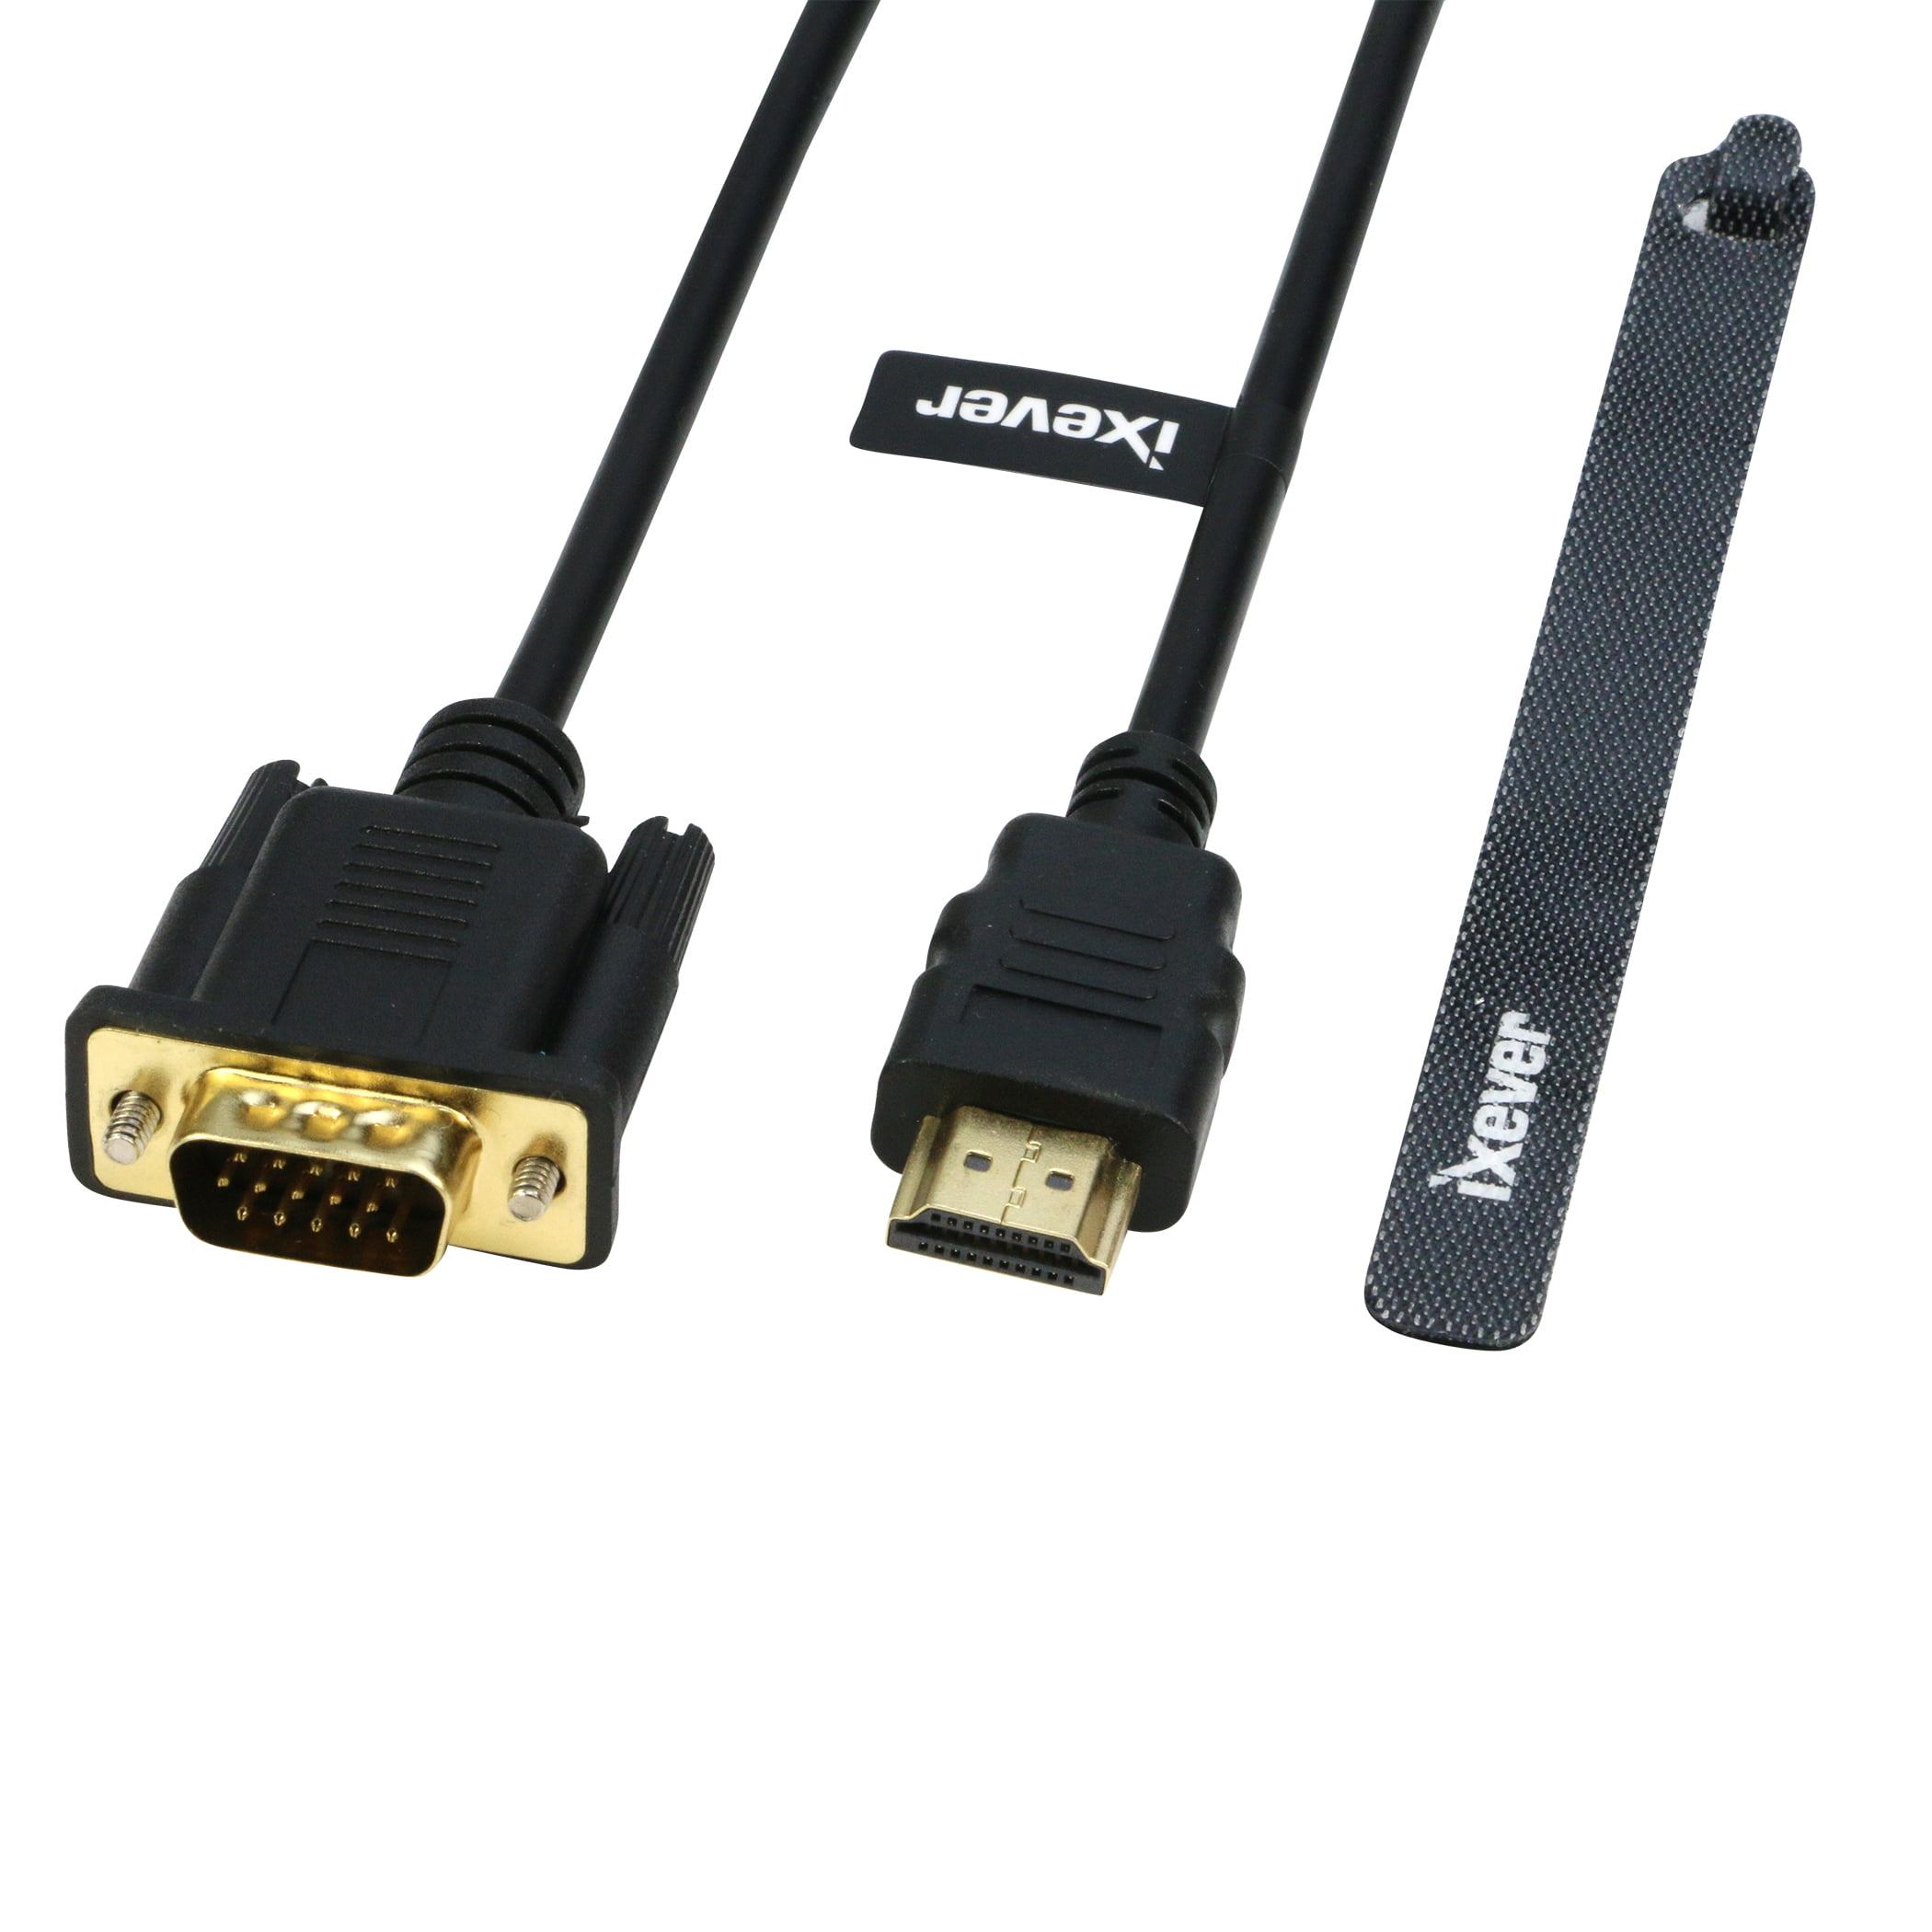 HDMI to VGA and audio adapter cable, single port, 1.8 m, black (A-HDMI-VGA -03-6)